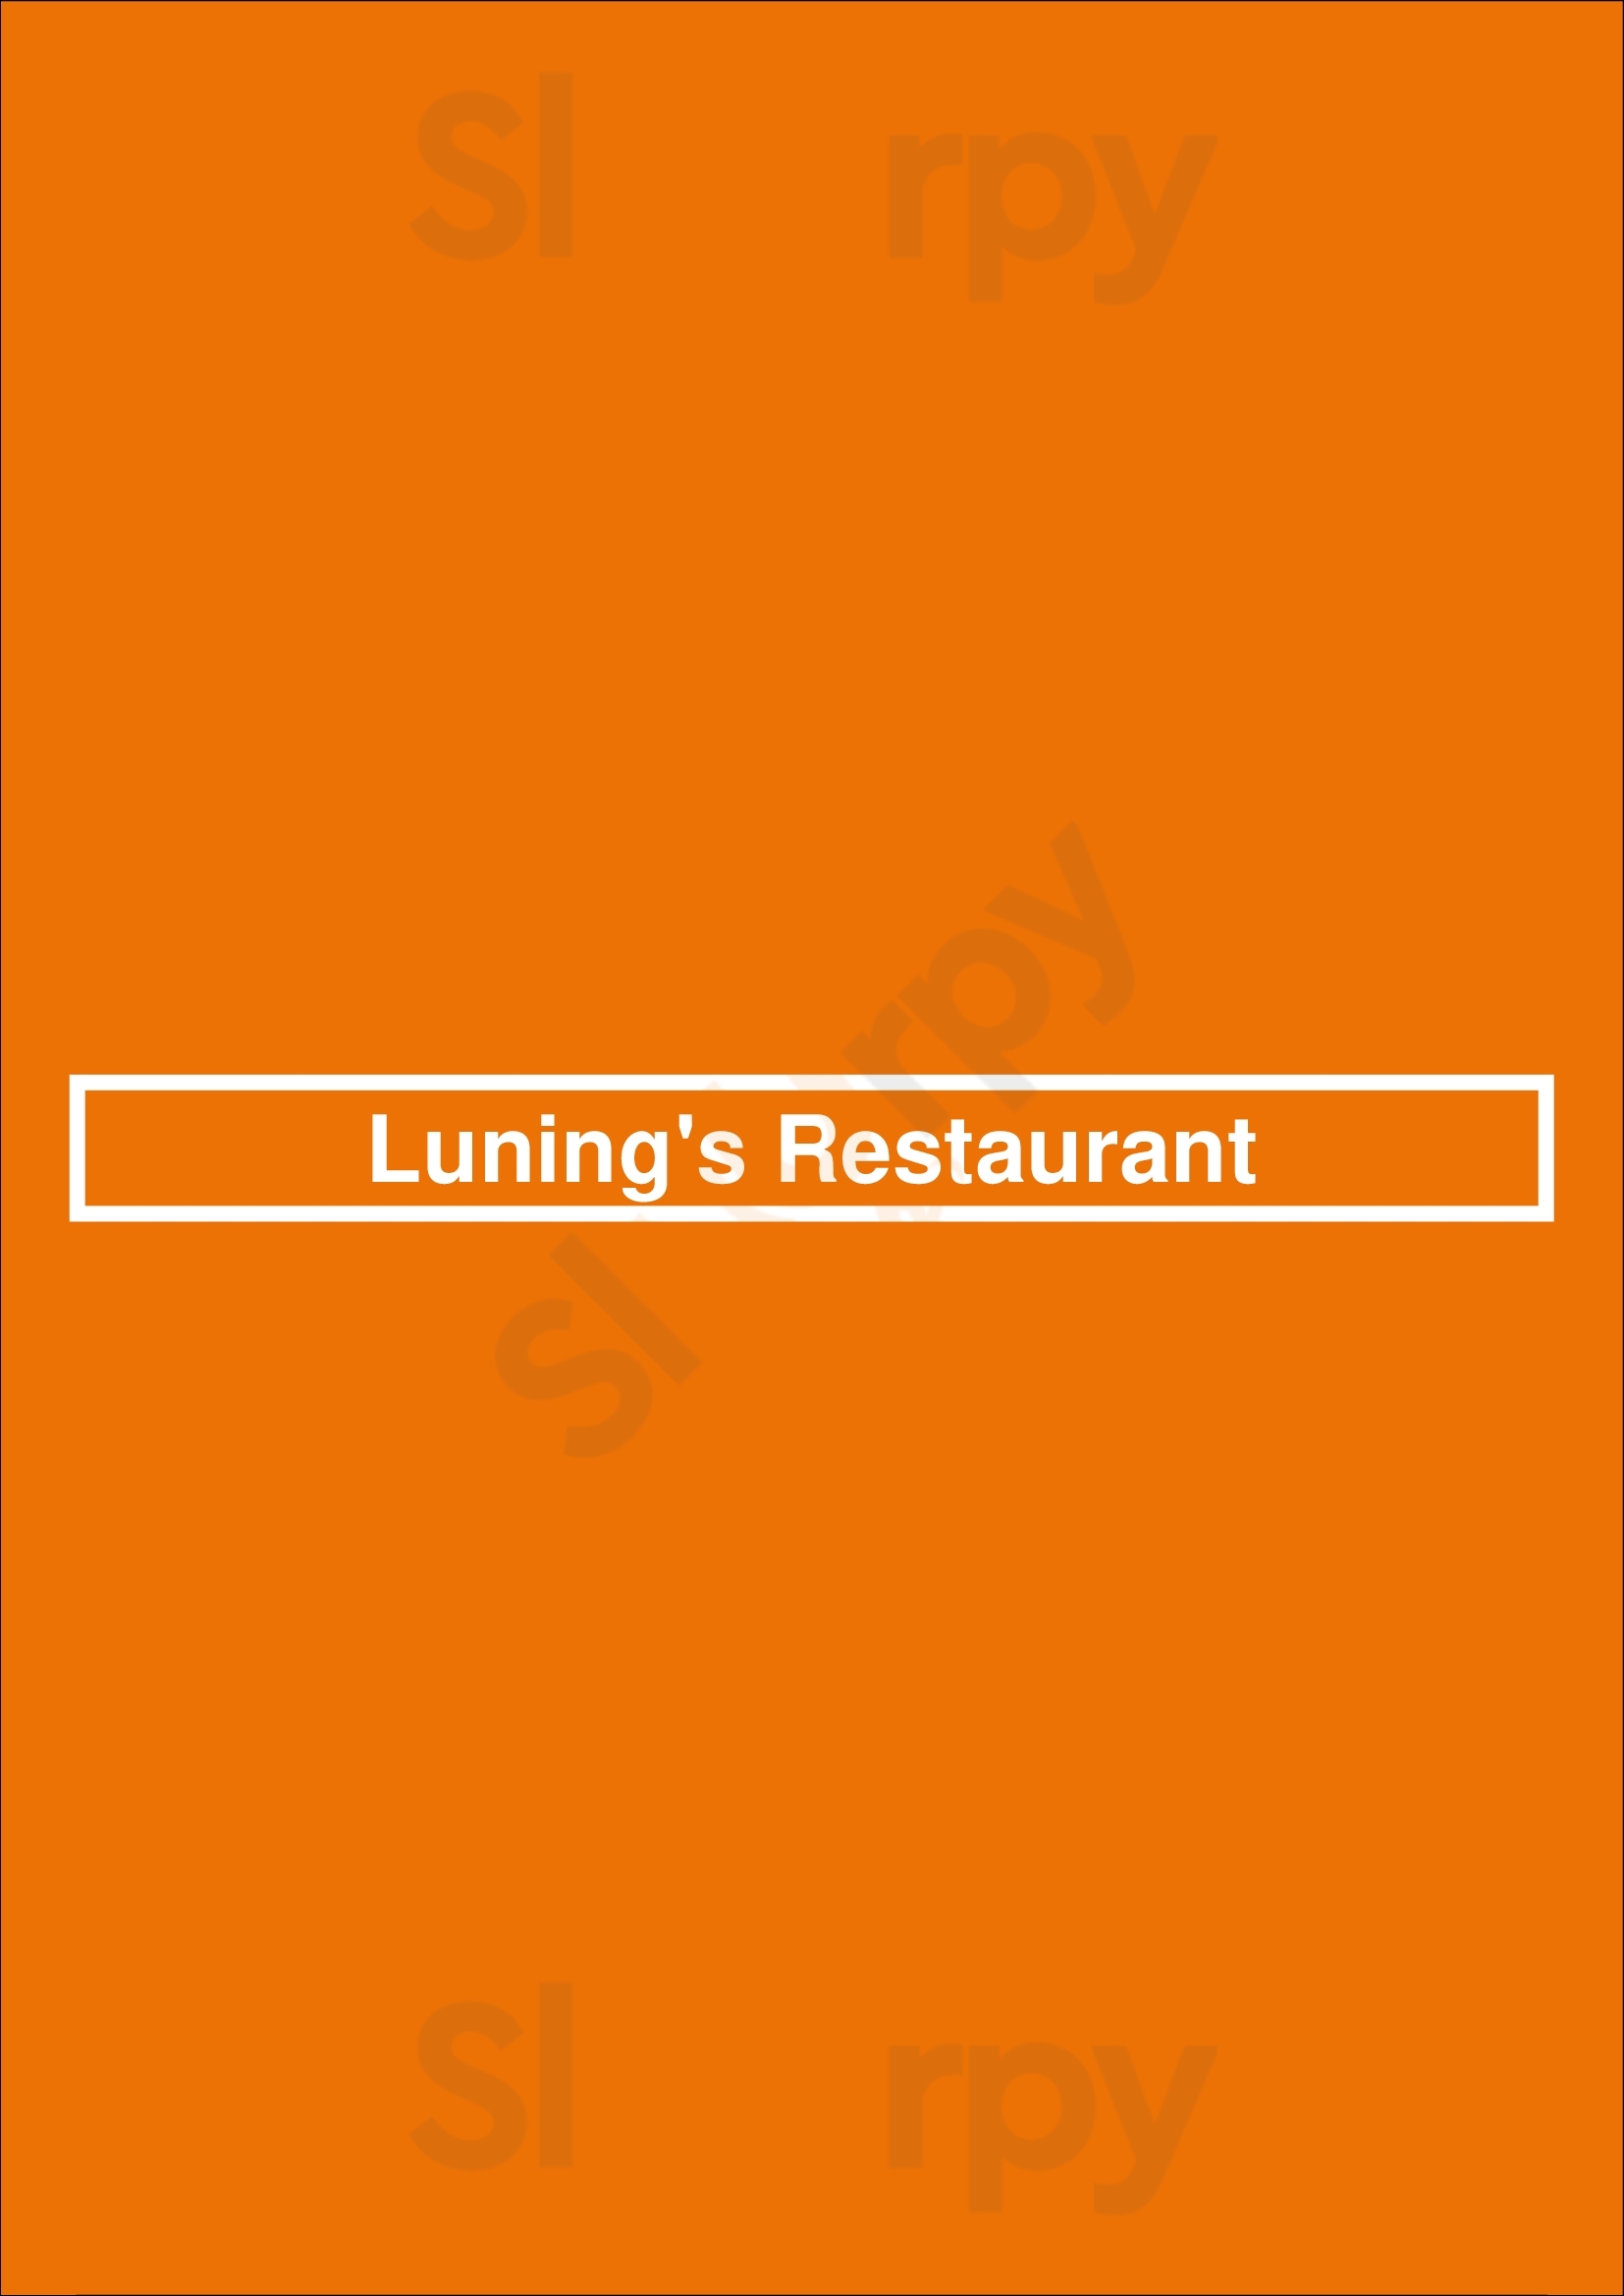 Luning's Restaurant Ruinen Menu - 1